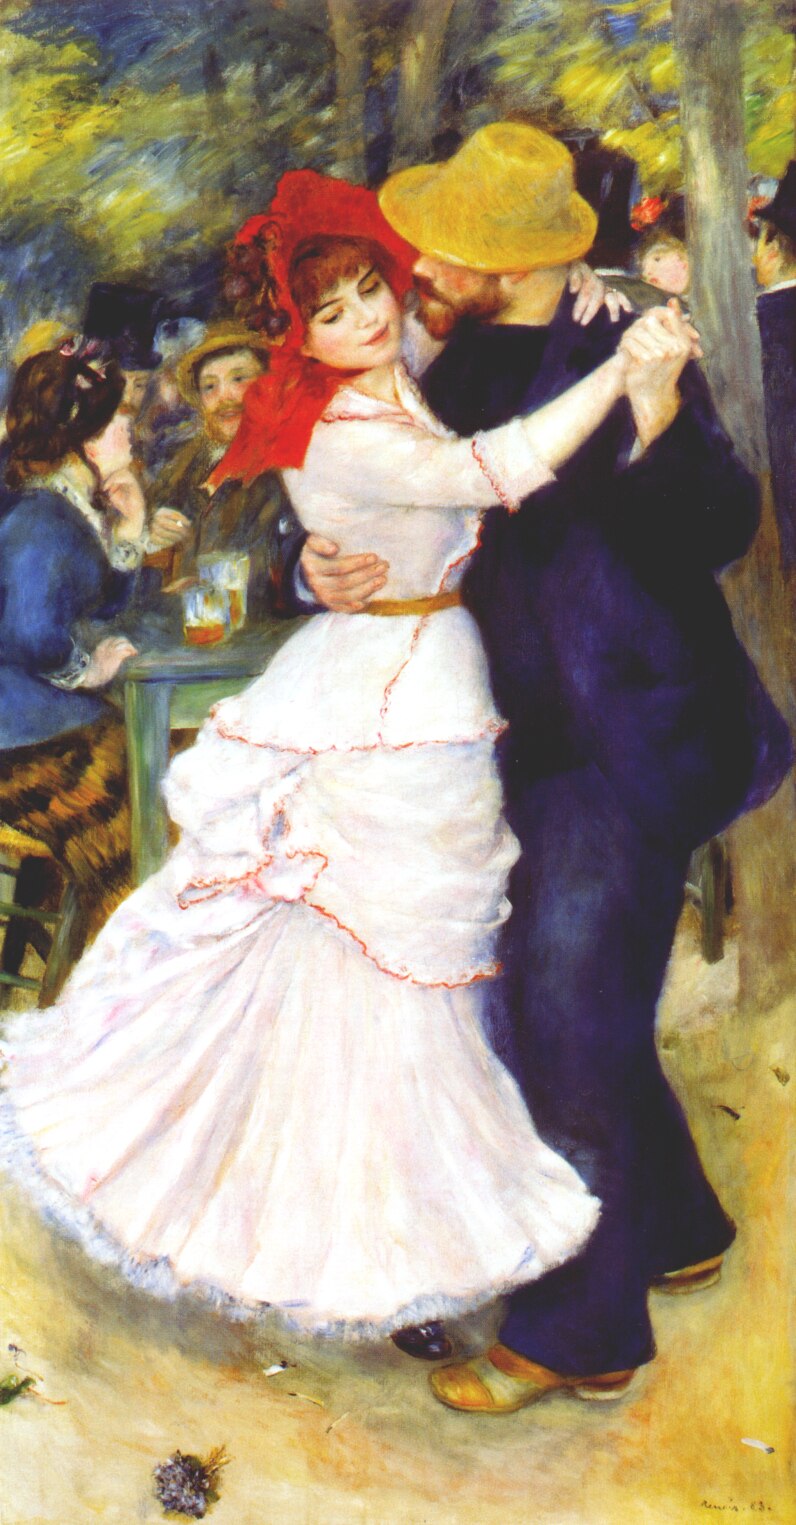 Dans la Bougival by Pierre-Auguste Renoir - 1883 - 98 x 182 cm 